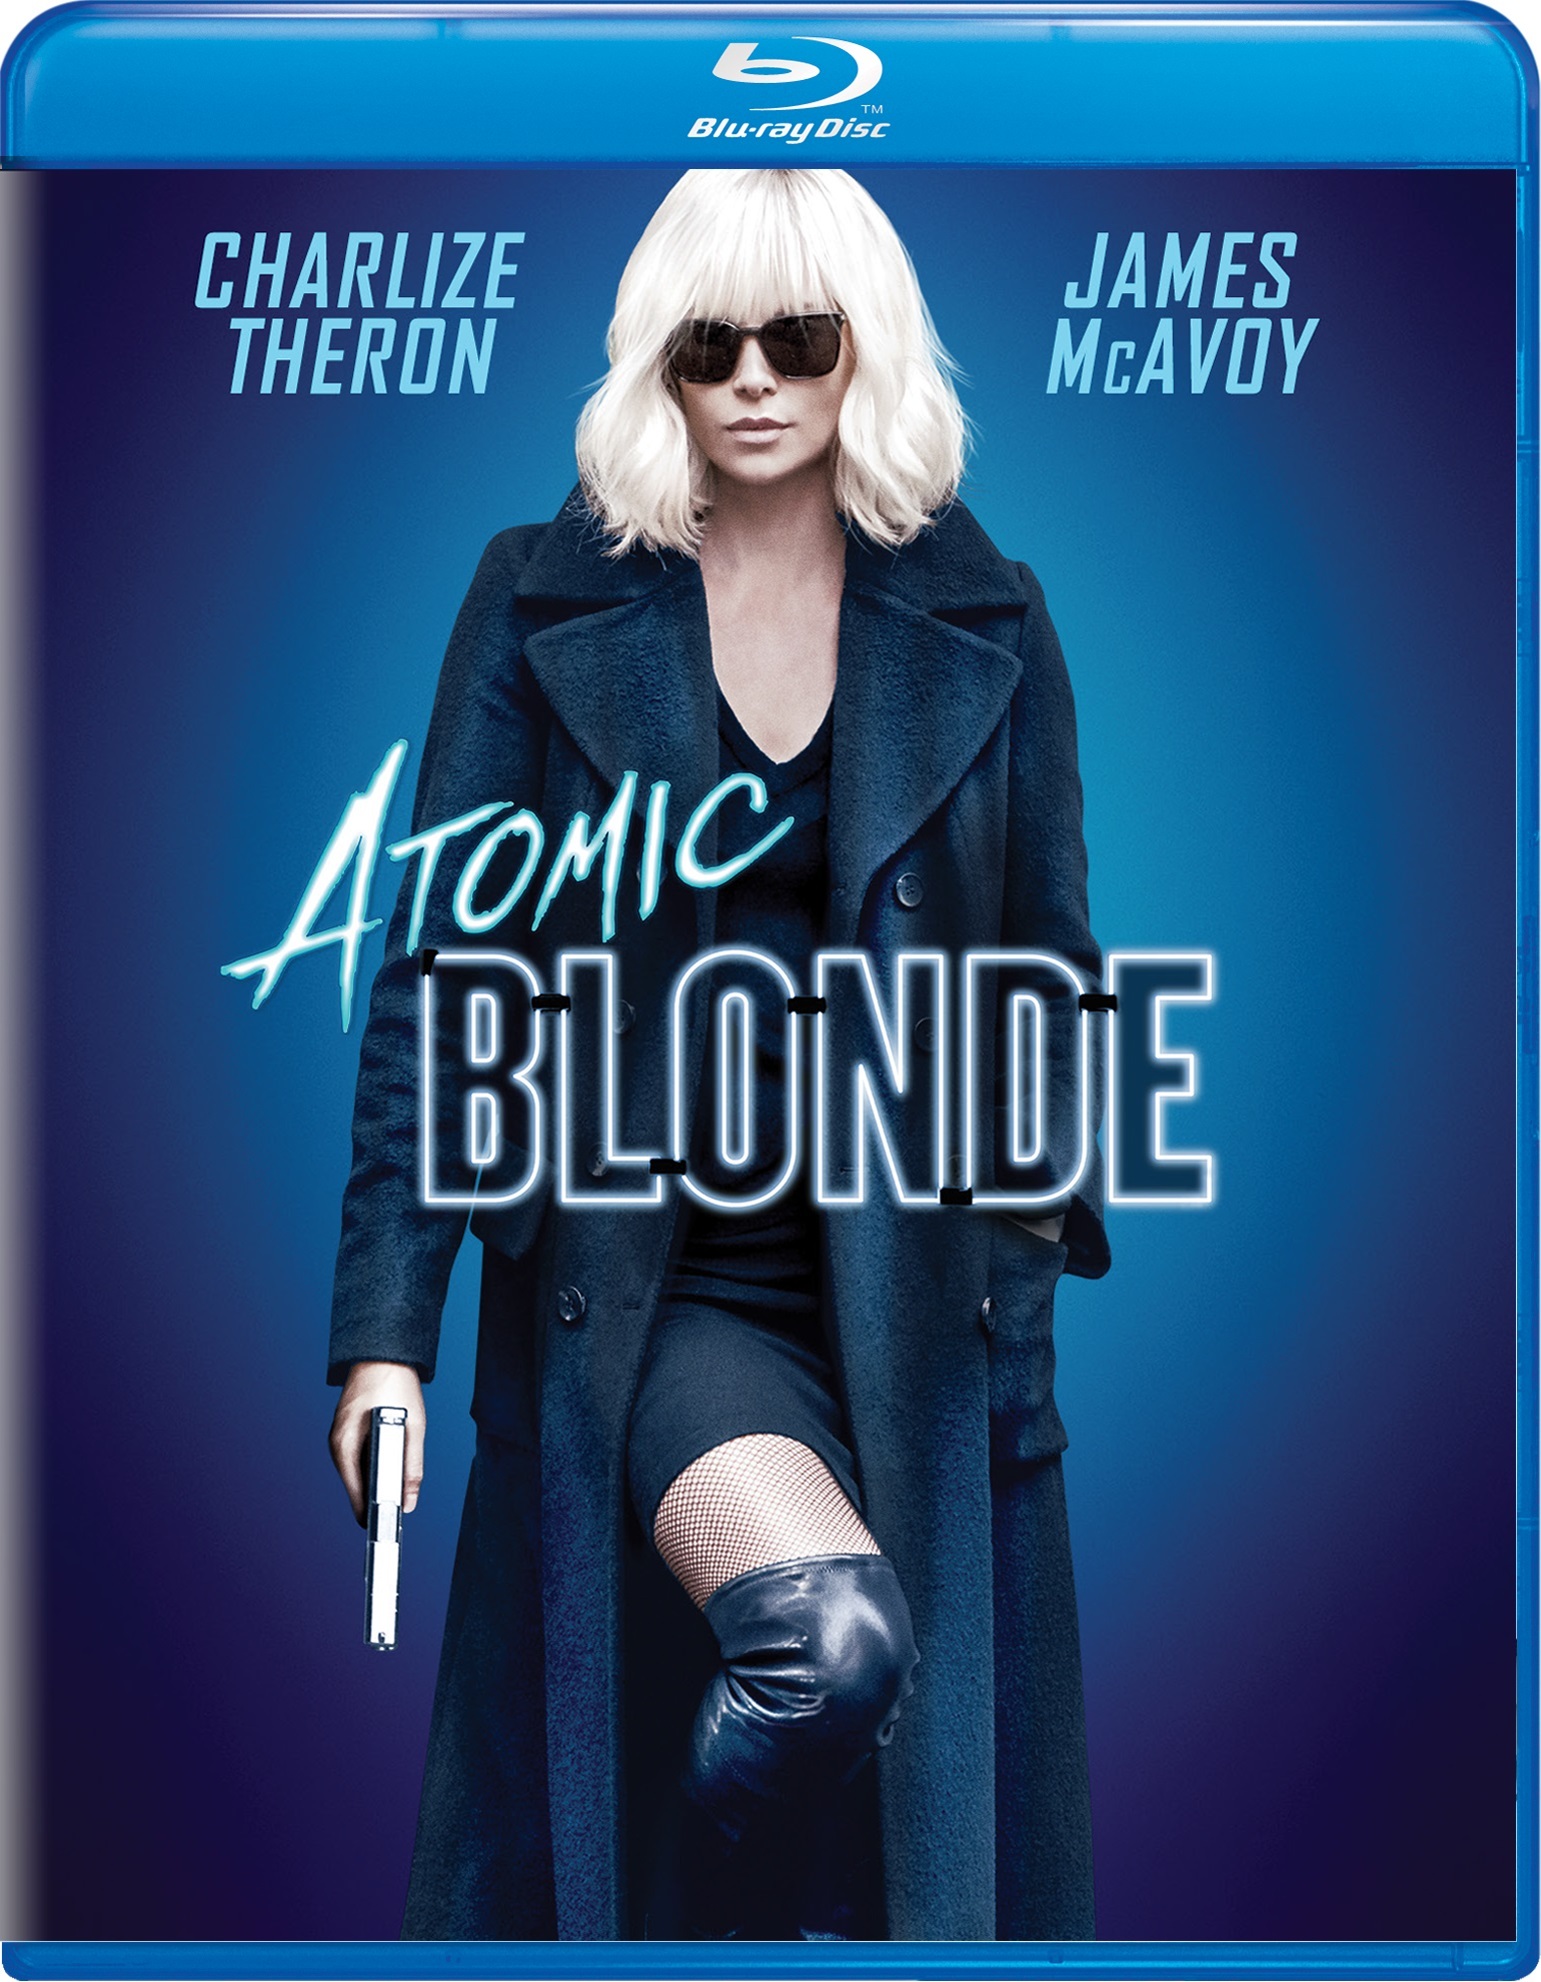 Atomic Blonde - Blu-ray [ 2017 ]  - Thriller Movies On Blu-ray - Movies On GRUV